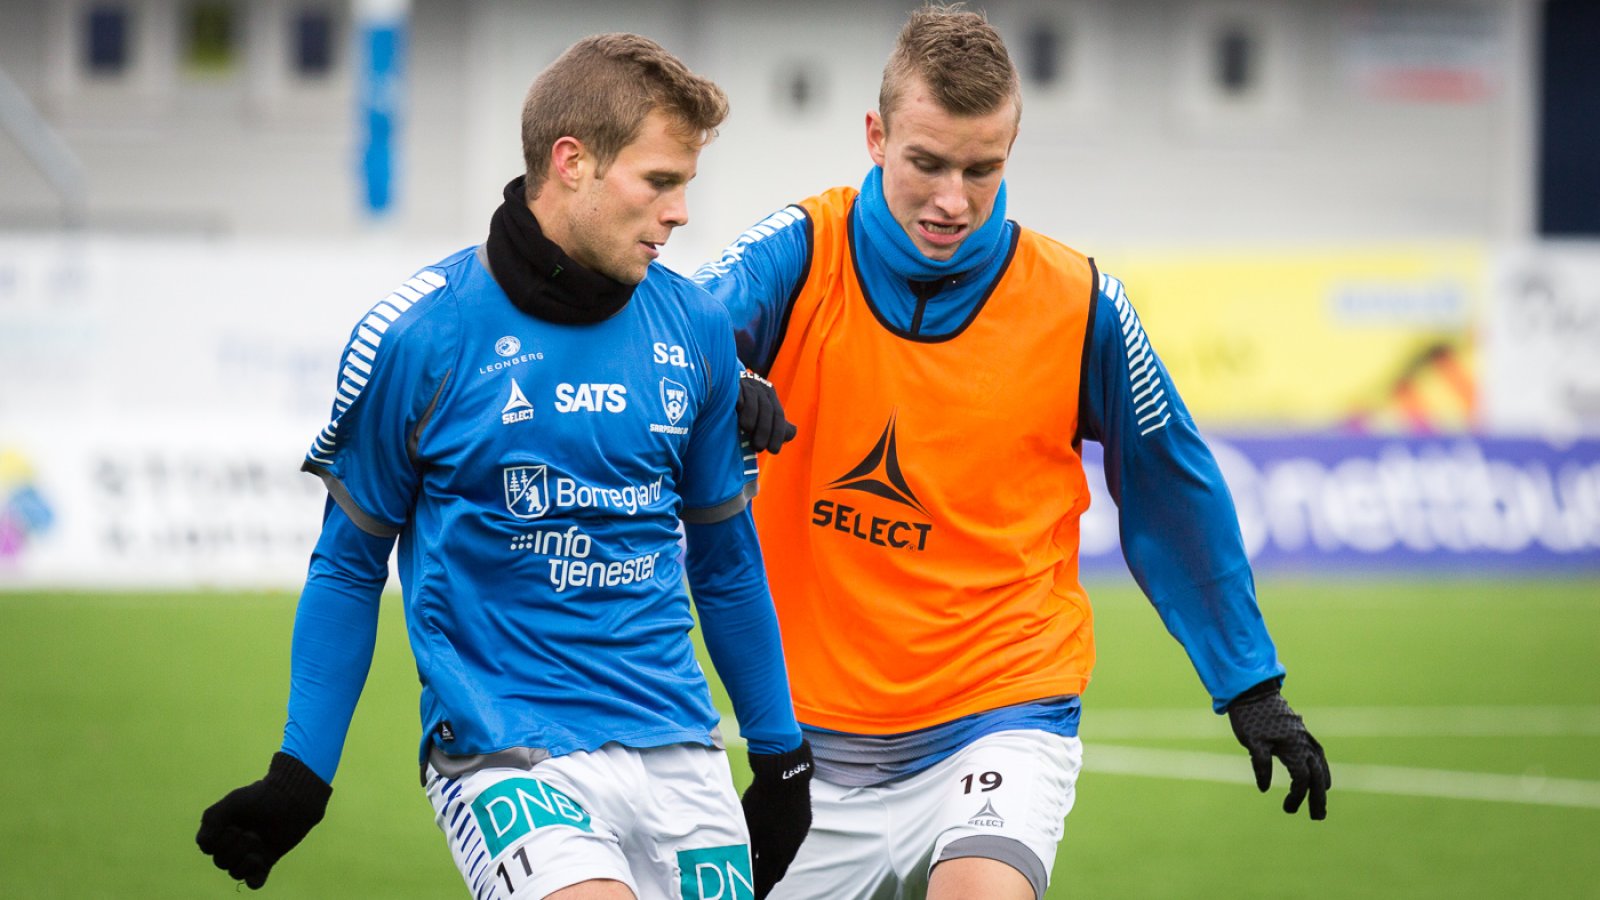 Olav Øby og Martin Hoel Andersen på treningsfeltet på Sarpsborg Stadion